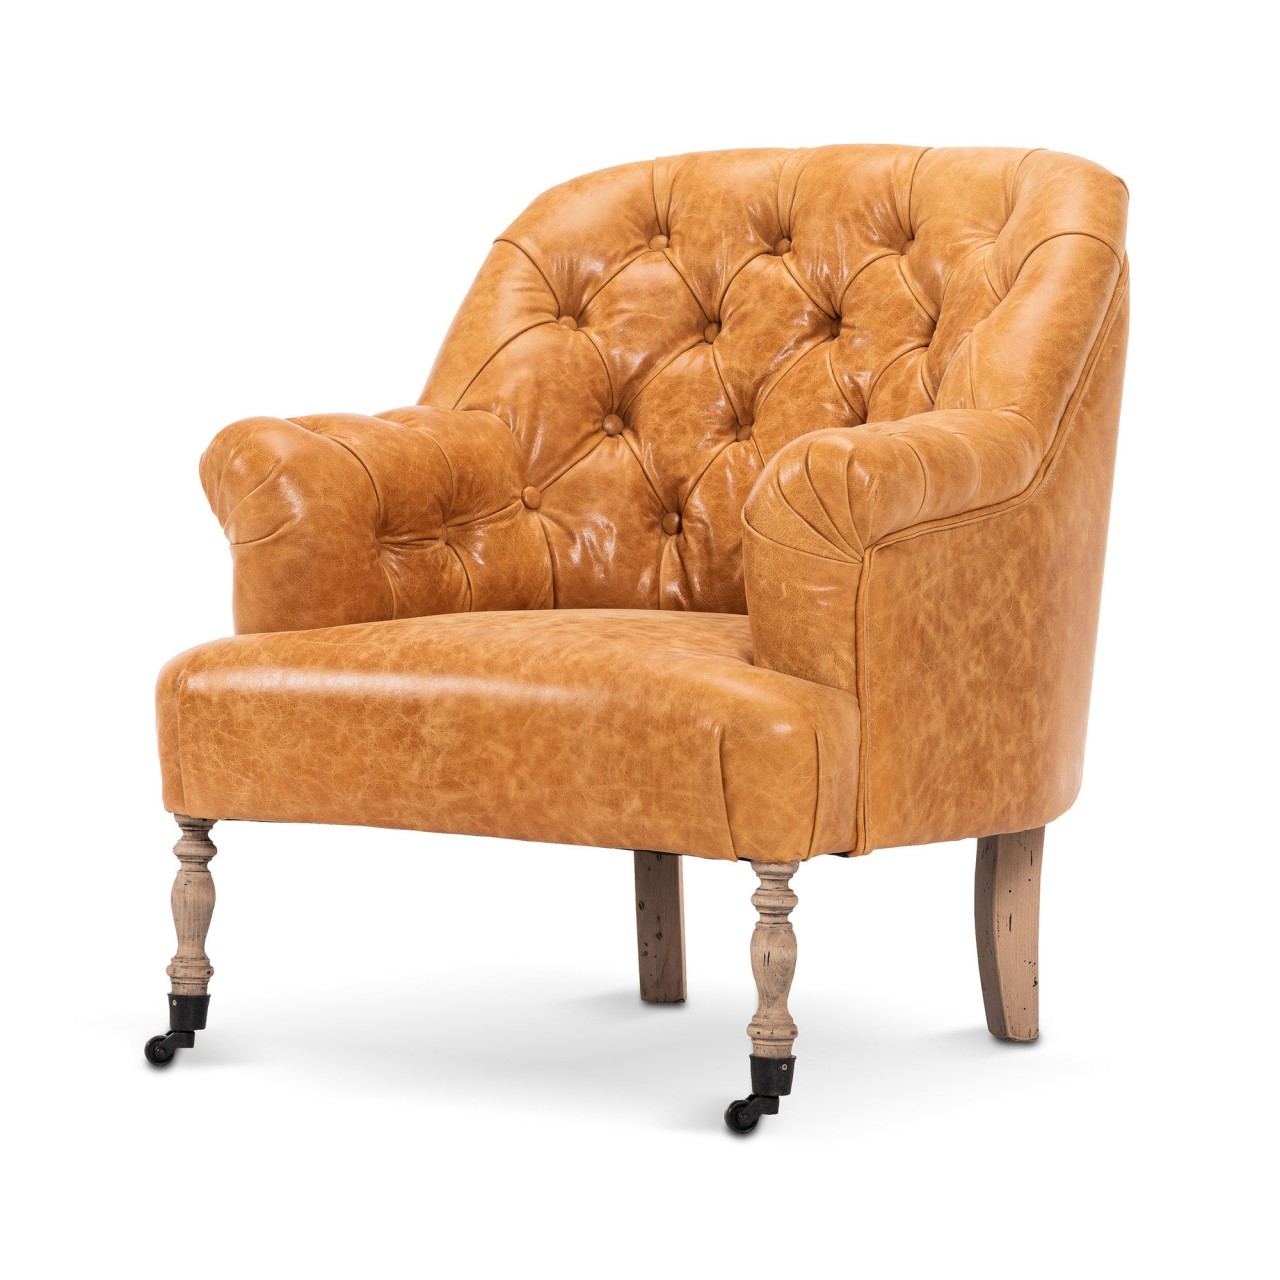 ST. GERMAINE Chair - CAMBRIDGE CHESTNUT leather